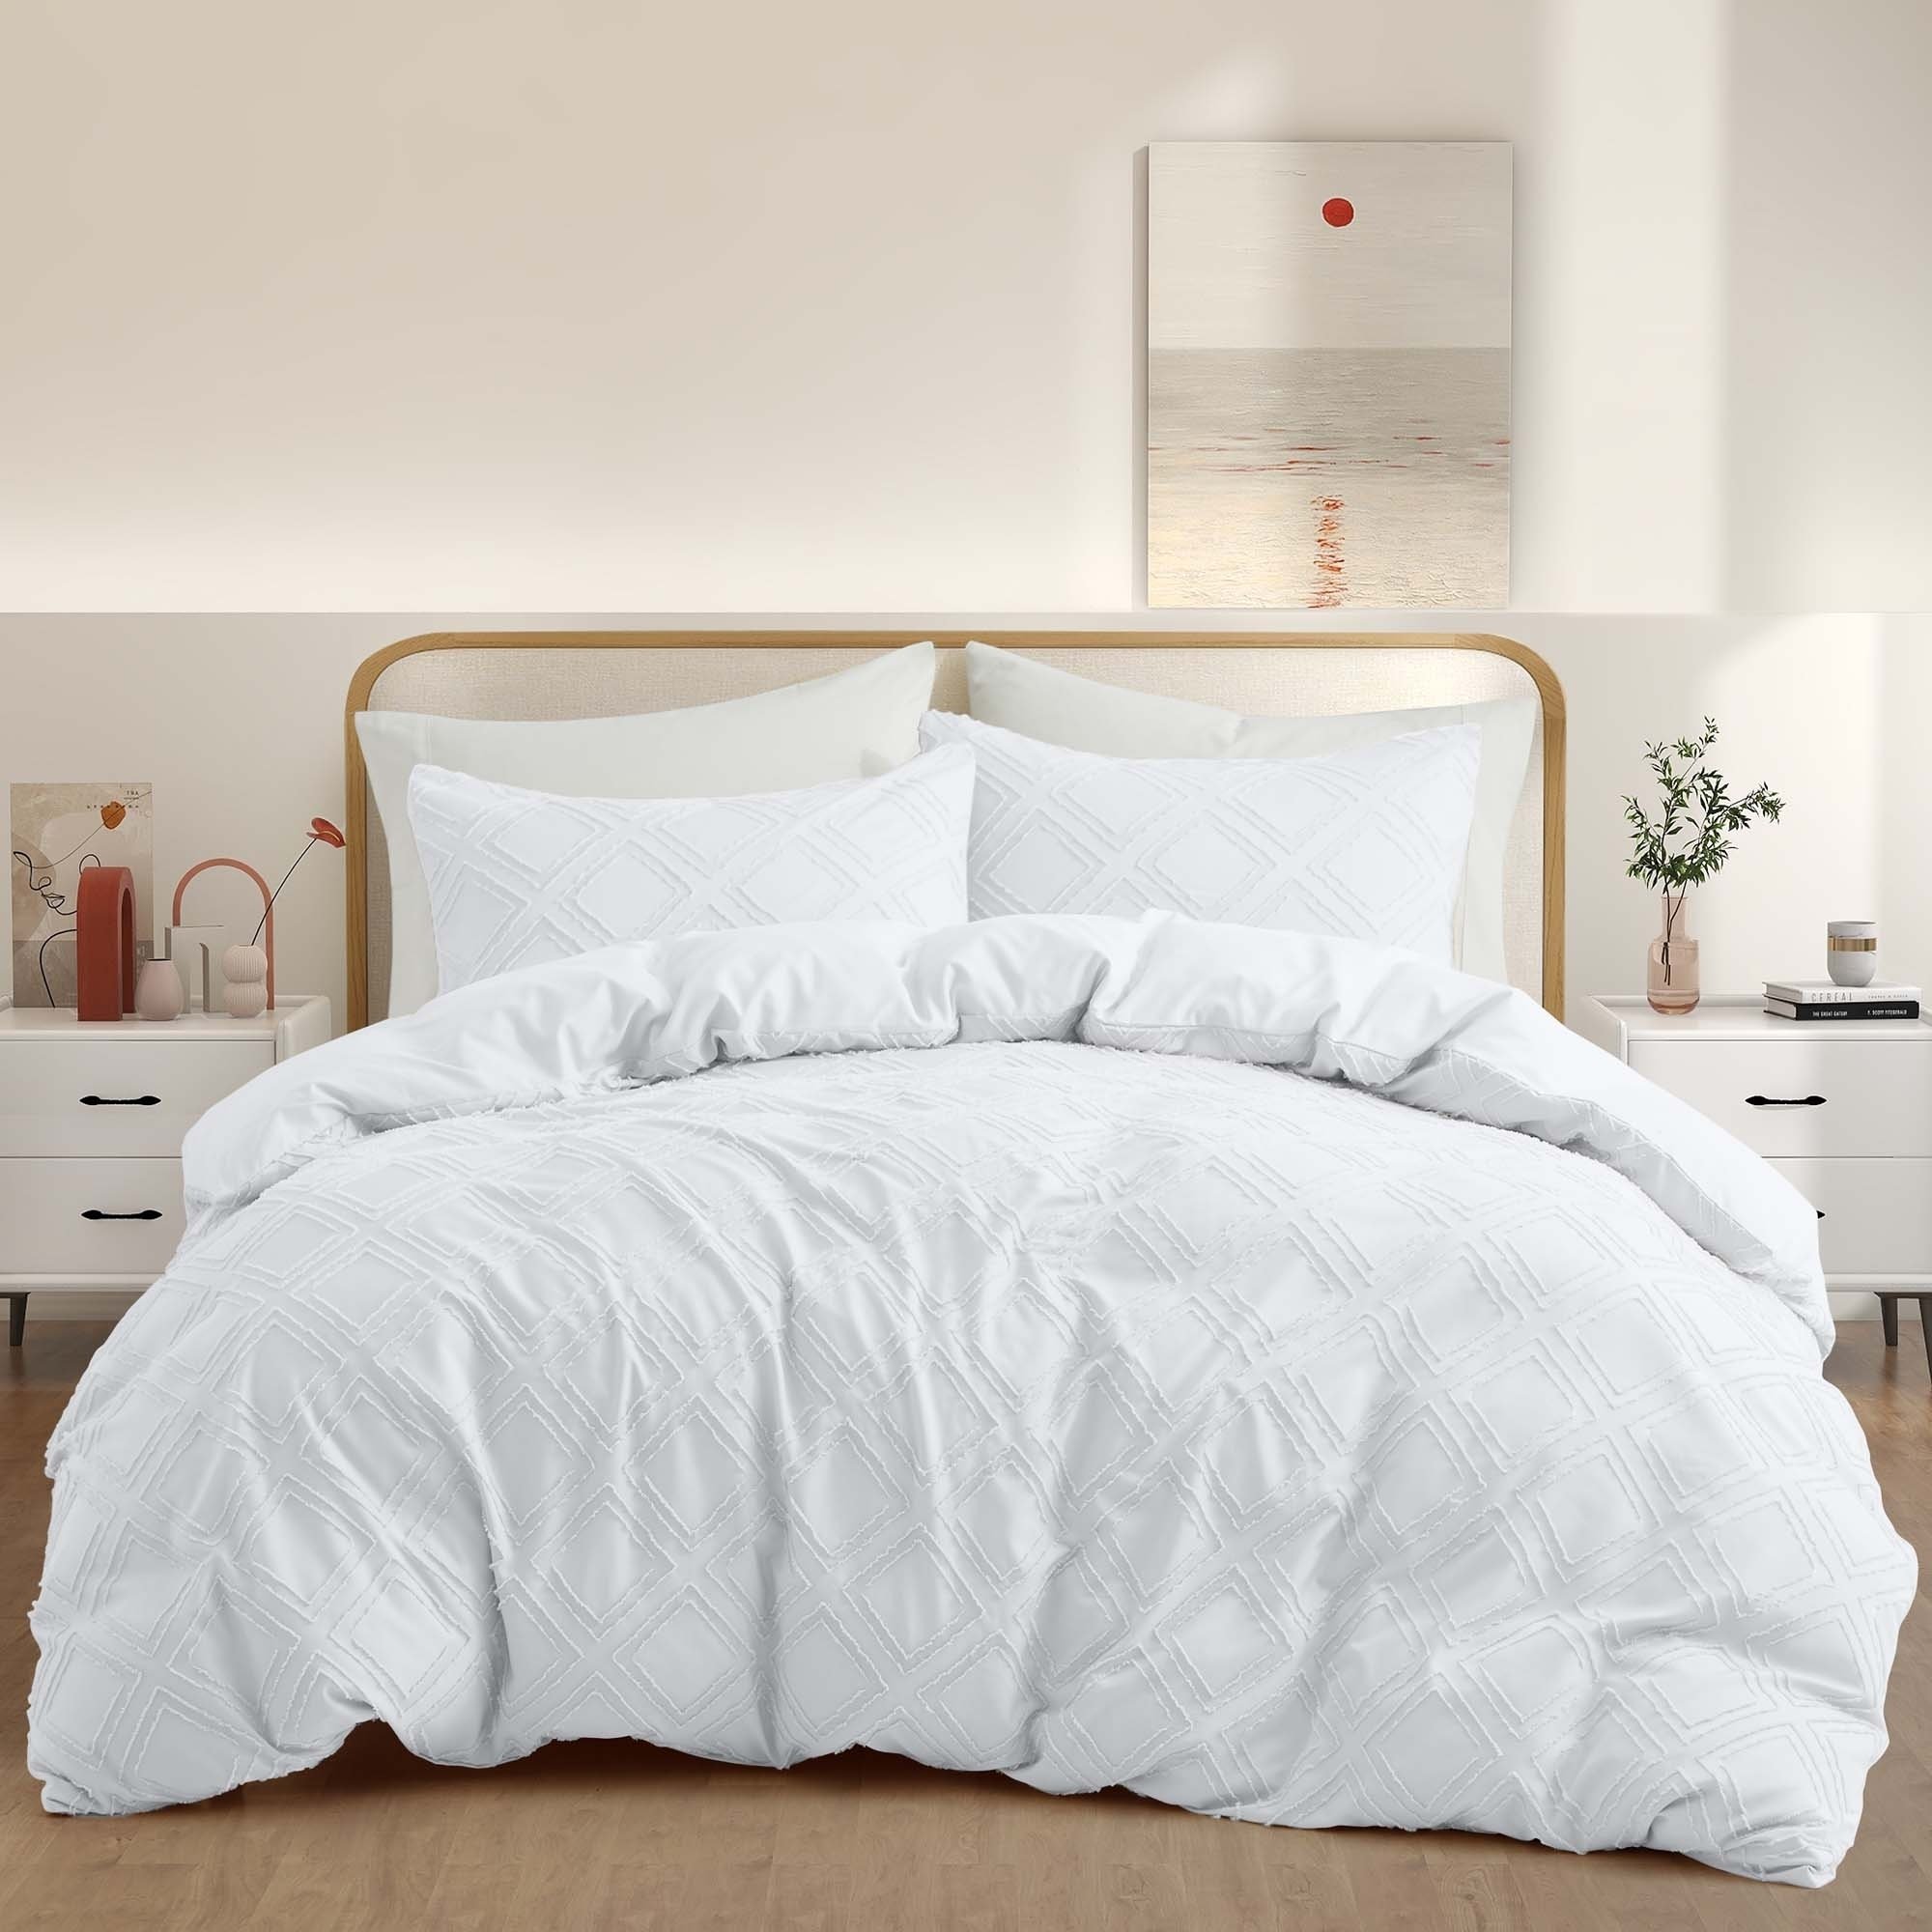 Basic Bedding Sets With All Season Goose Down Feather Comforter, 2 Pack Goose Down Pillows, Duvet Cover Set - White Bundles Option, King Siz